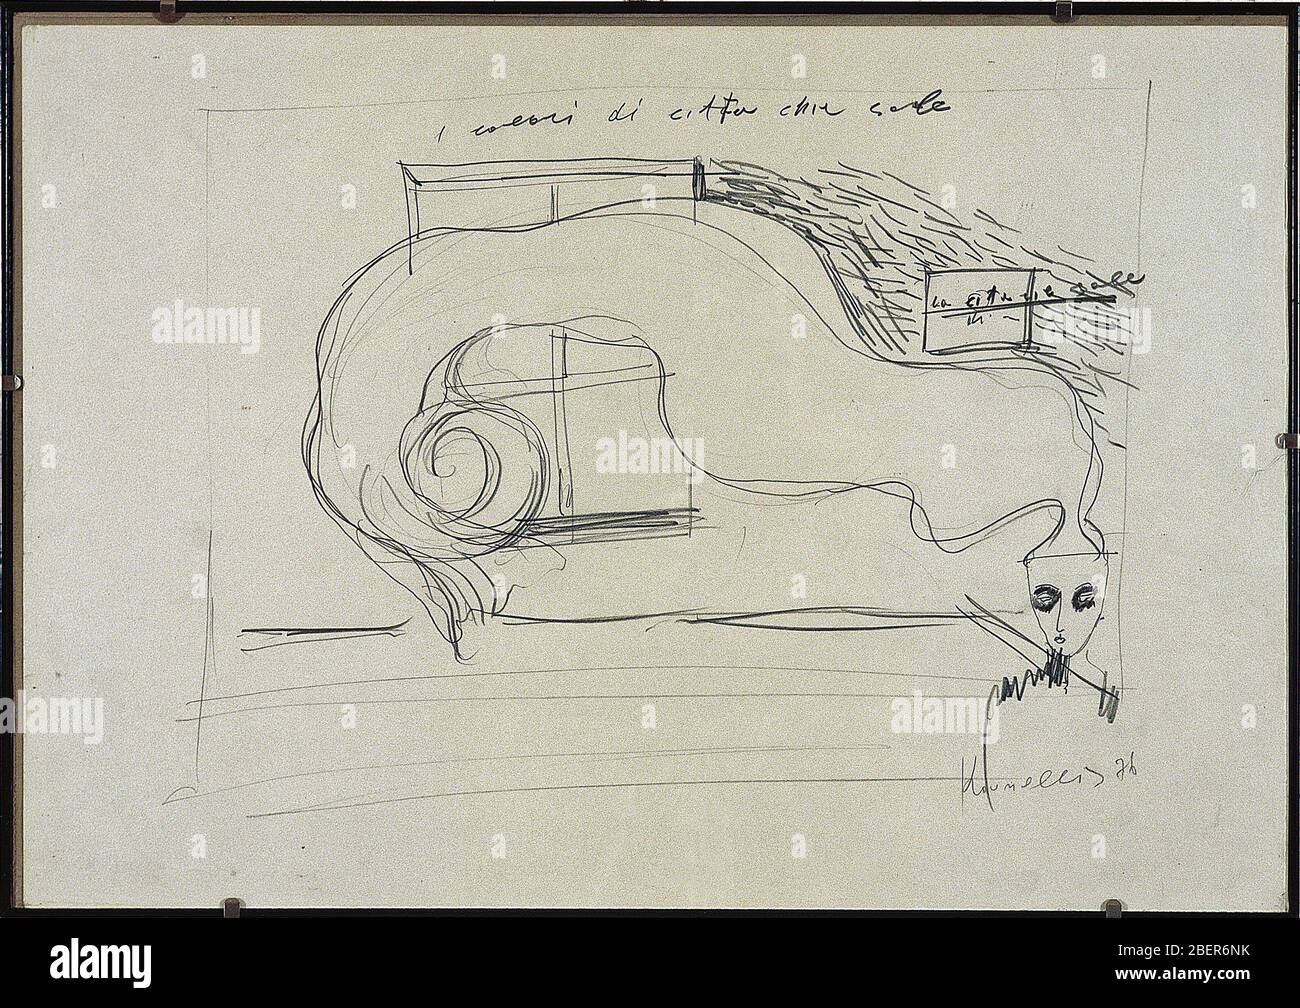 Sketch drawing (I colori di città che sale) of Jannis Kounellis at CAMUSAC Museum Contemporary Art Cassino, Italy Stock Photo